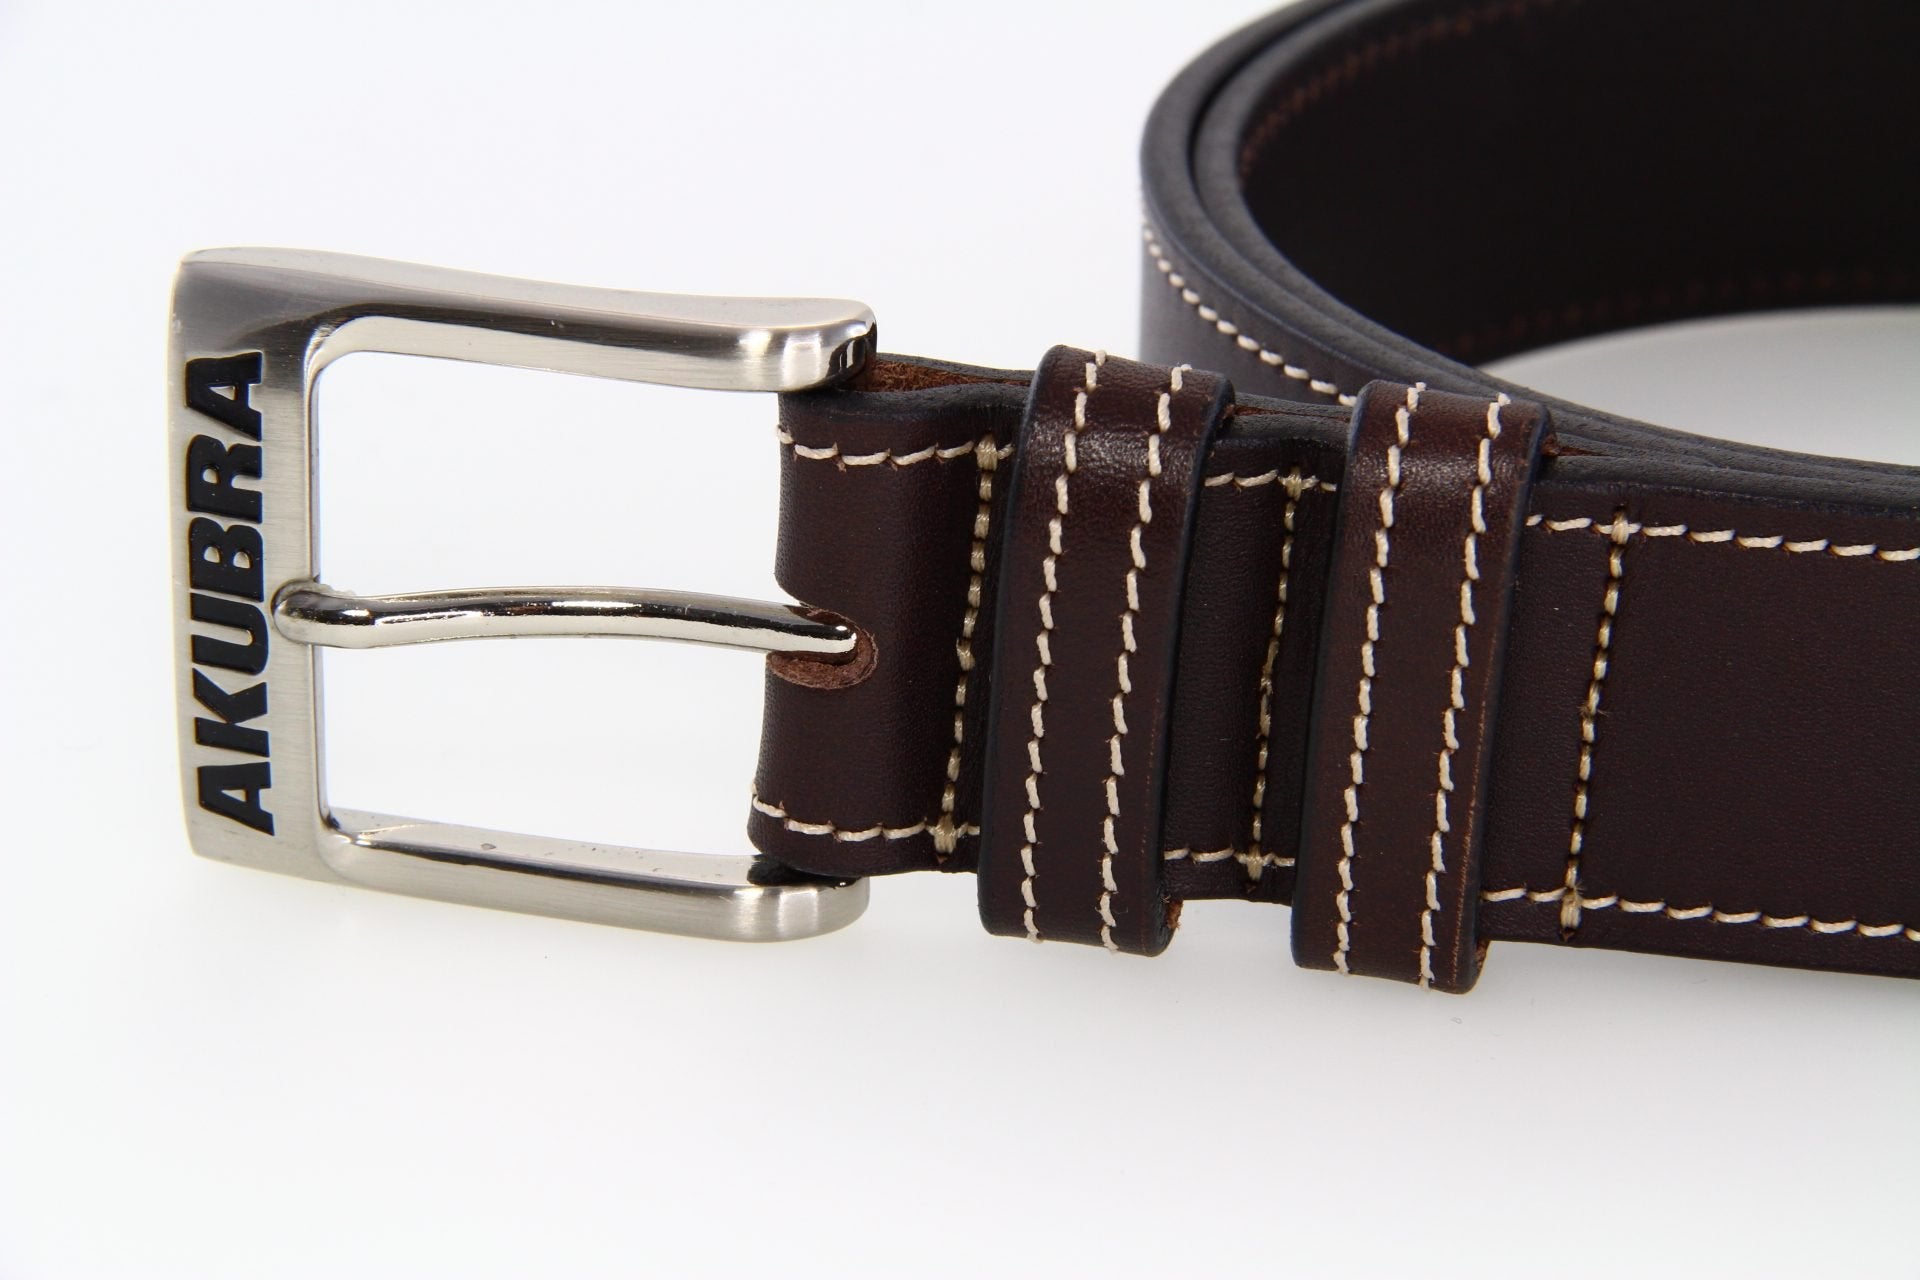 Akubra Leather Belt Steve - Brown Contrast Stitch